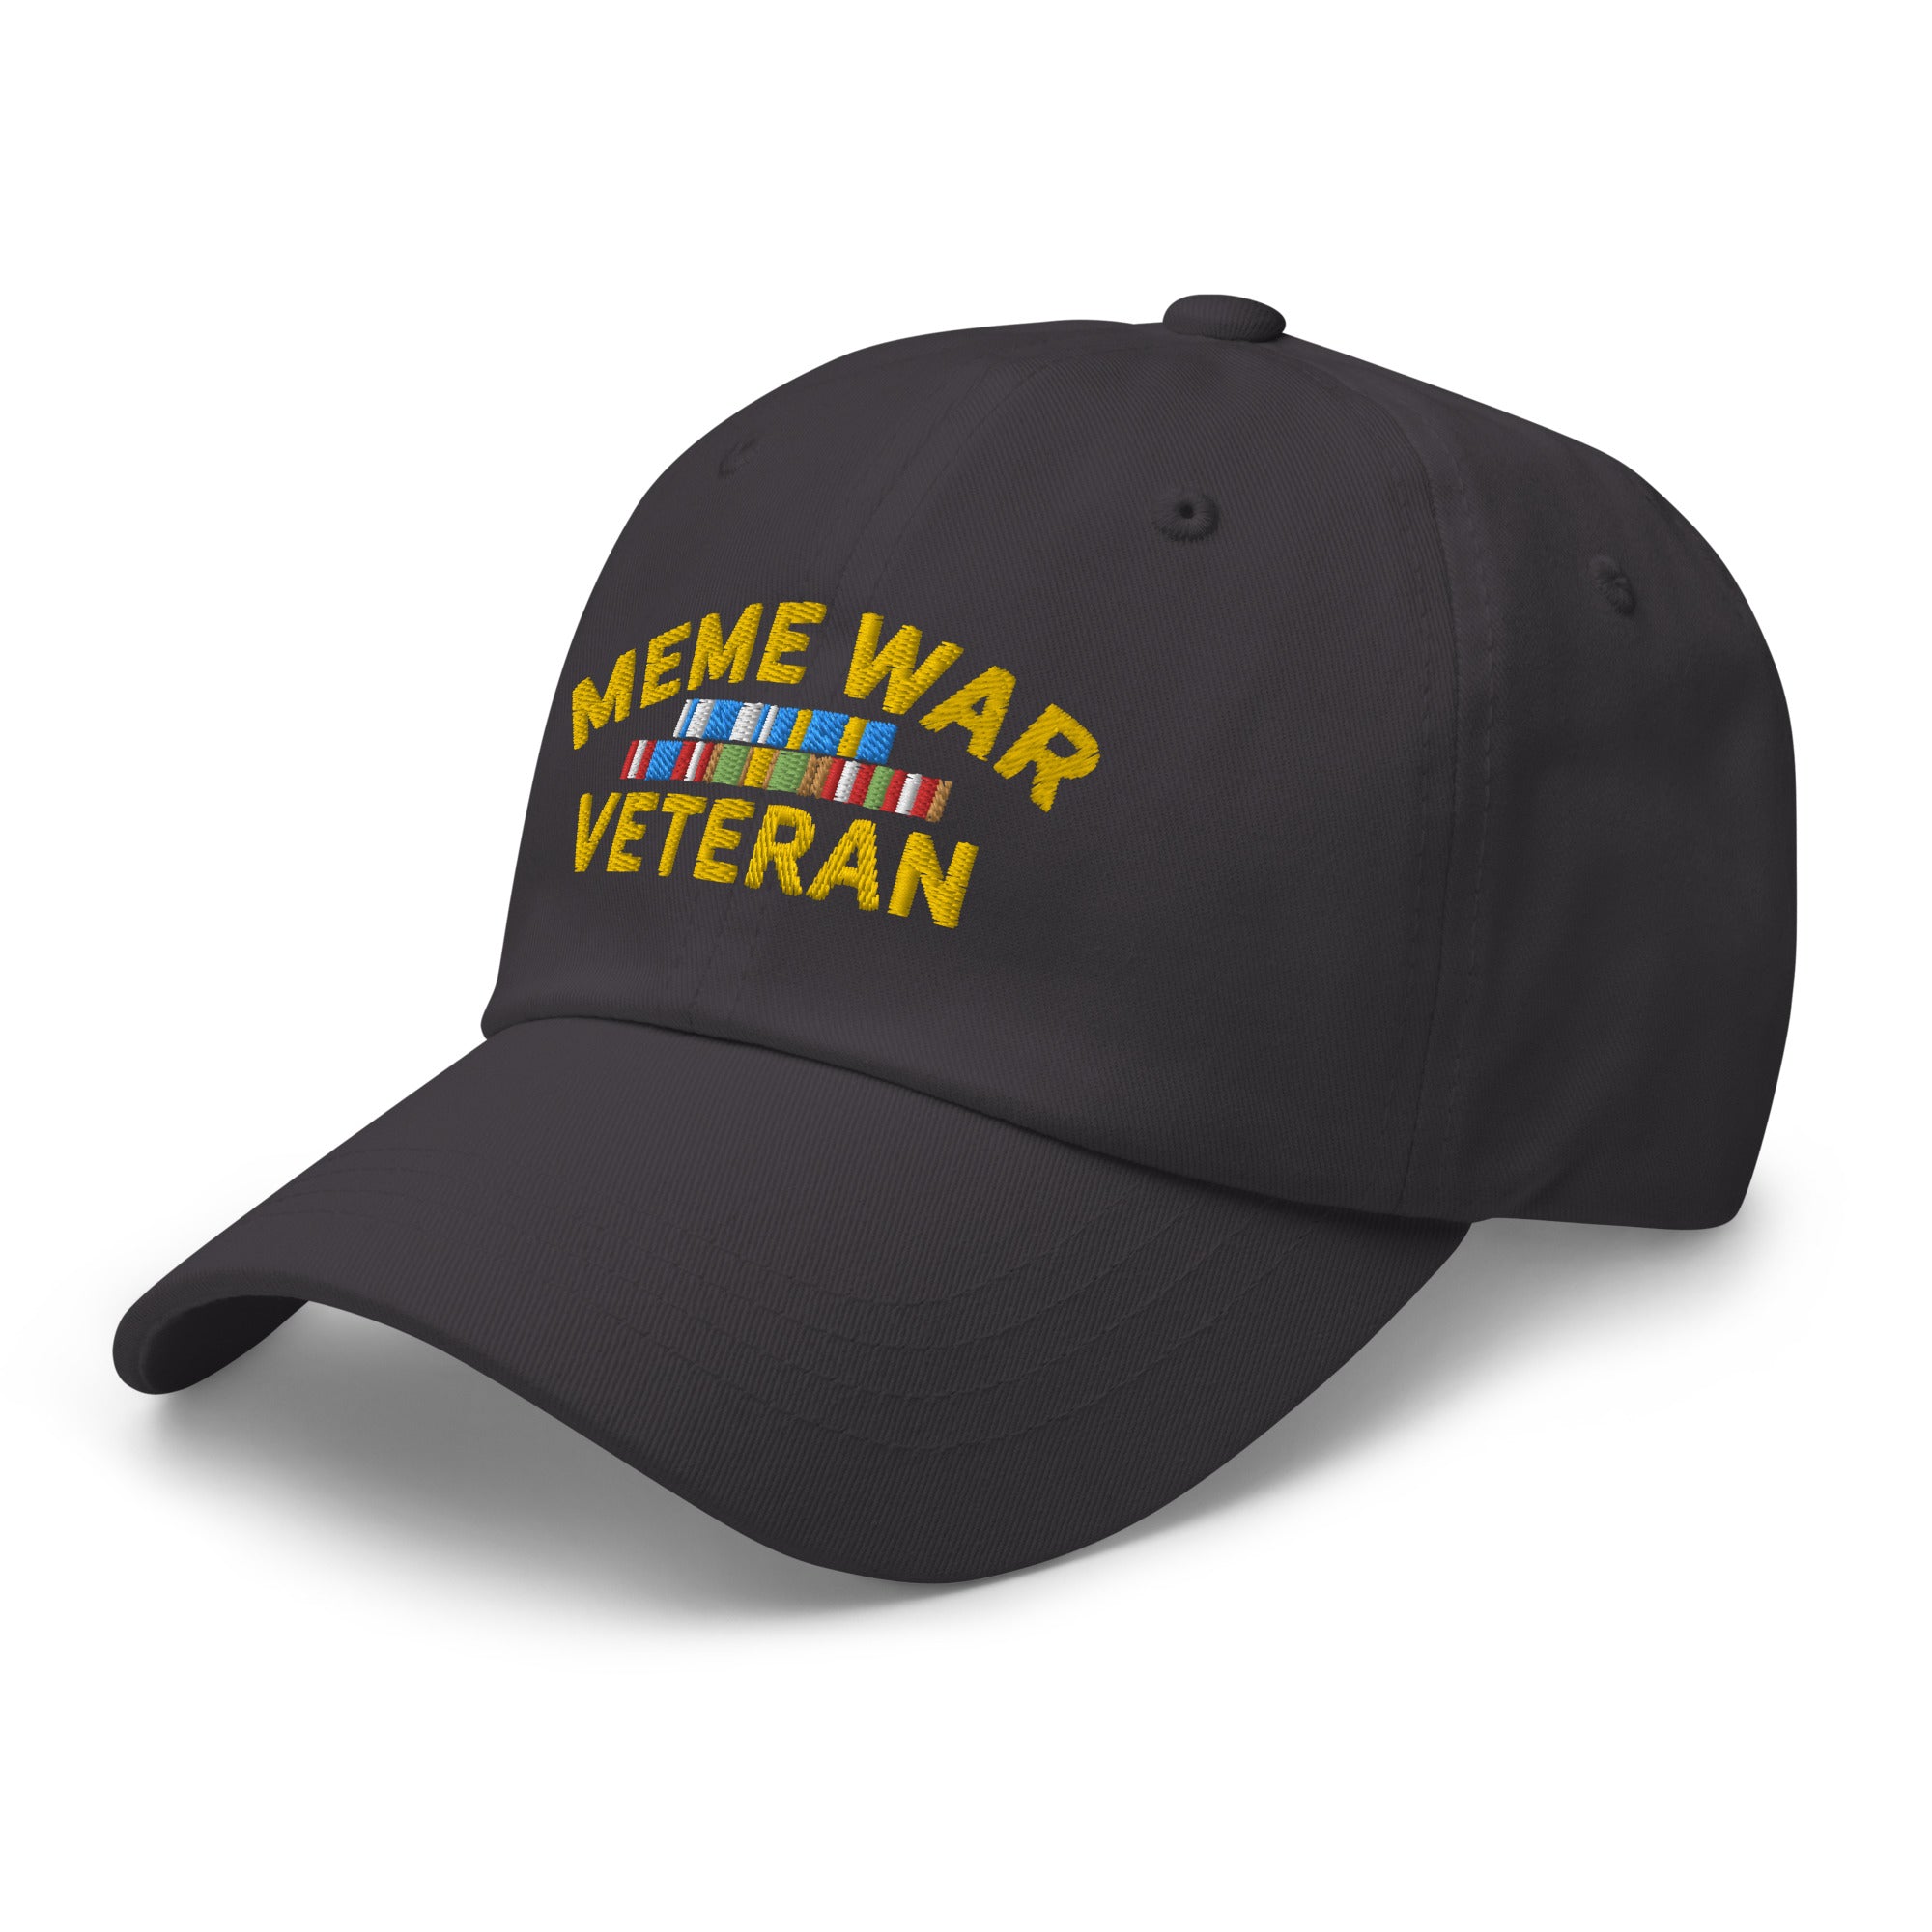 Meme War Veteran Chino Cotton Twill Dad hat